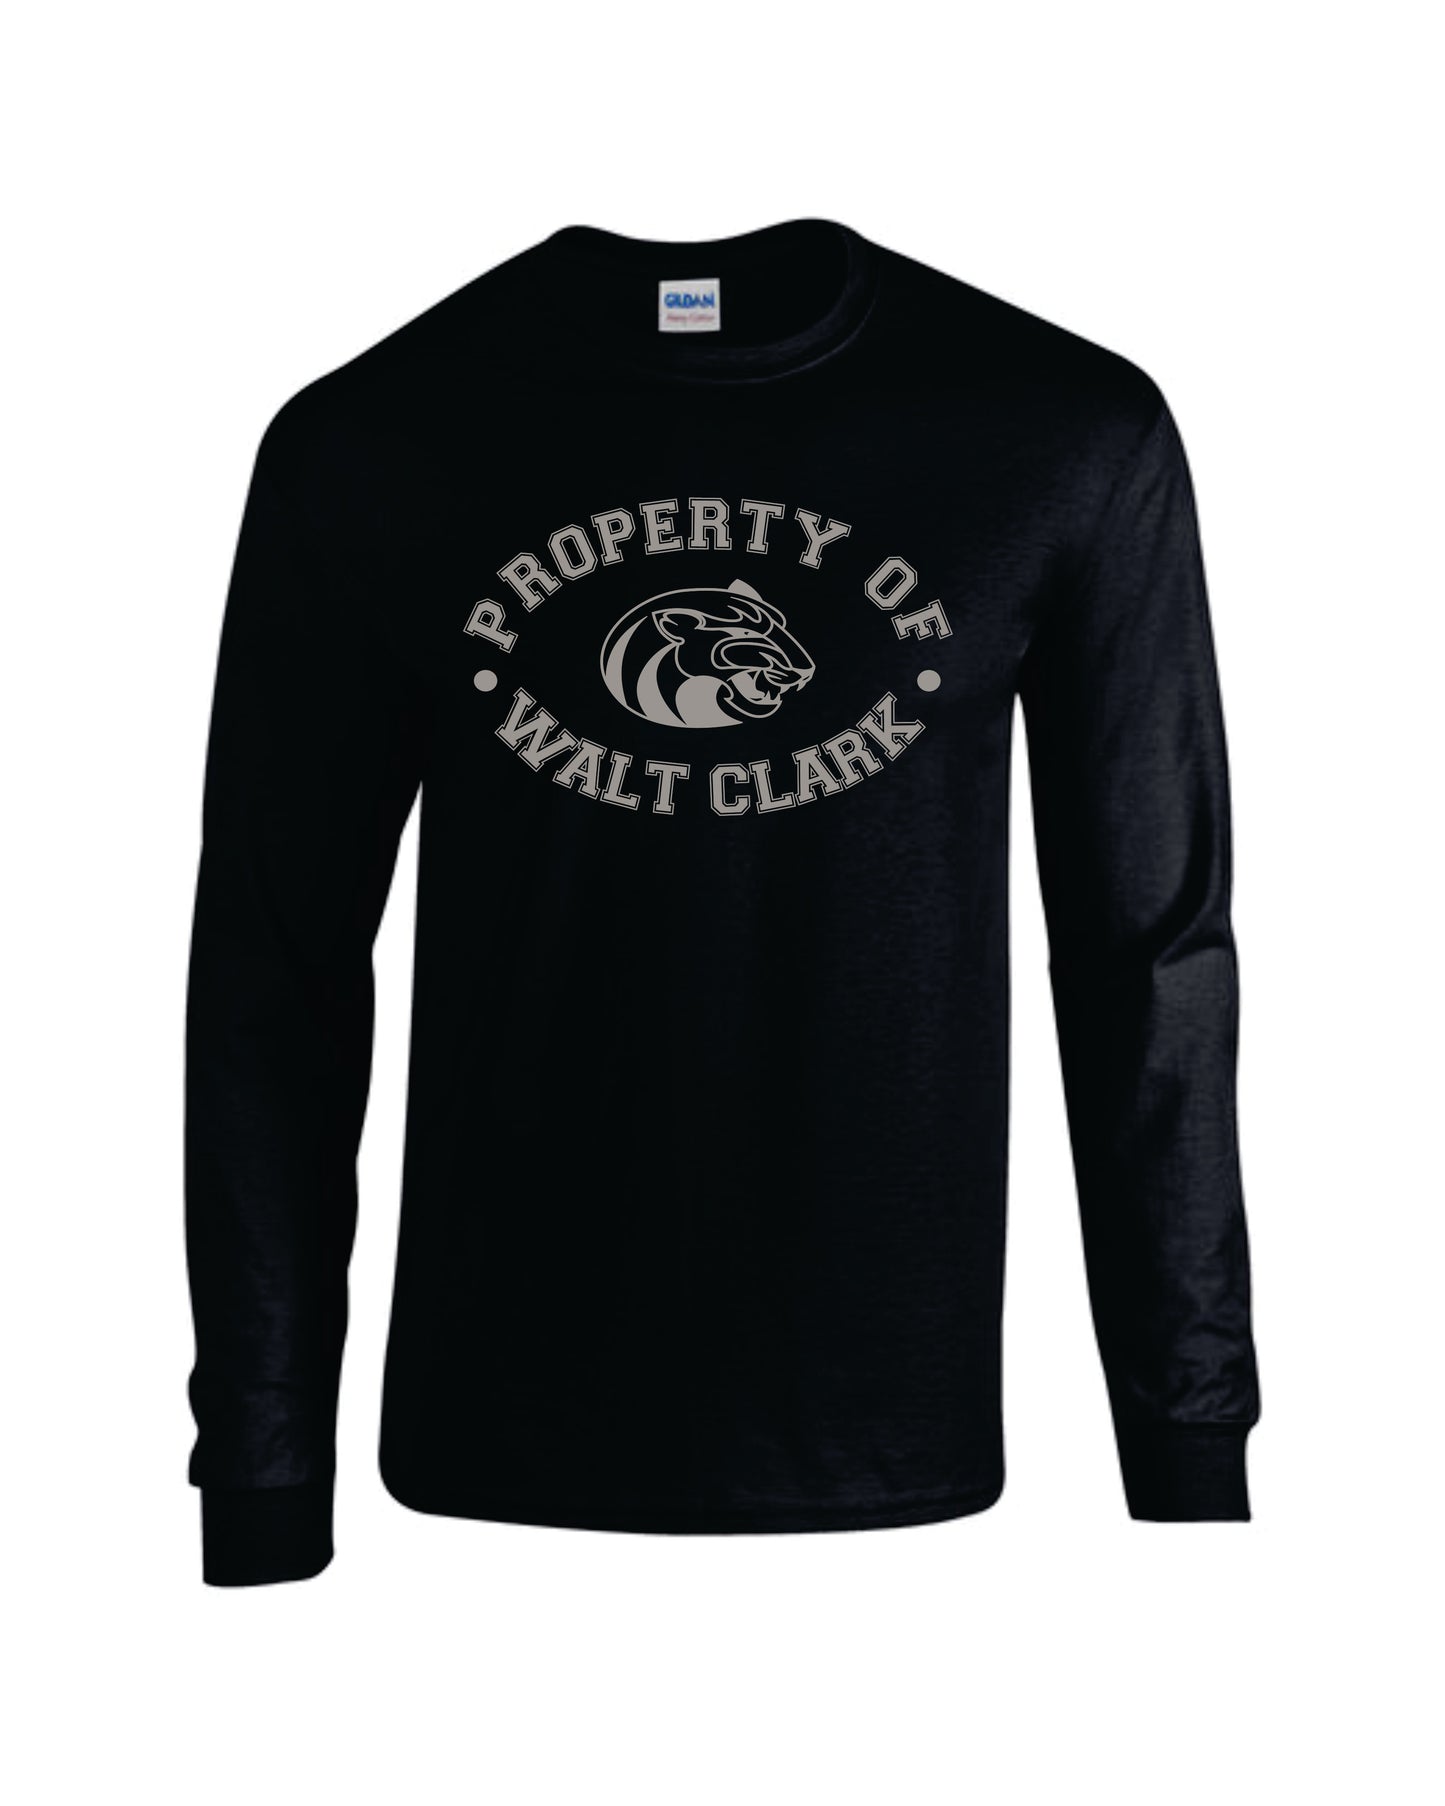 WCMS Property of Walt Clark logo